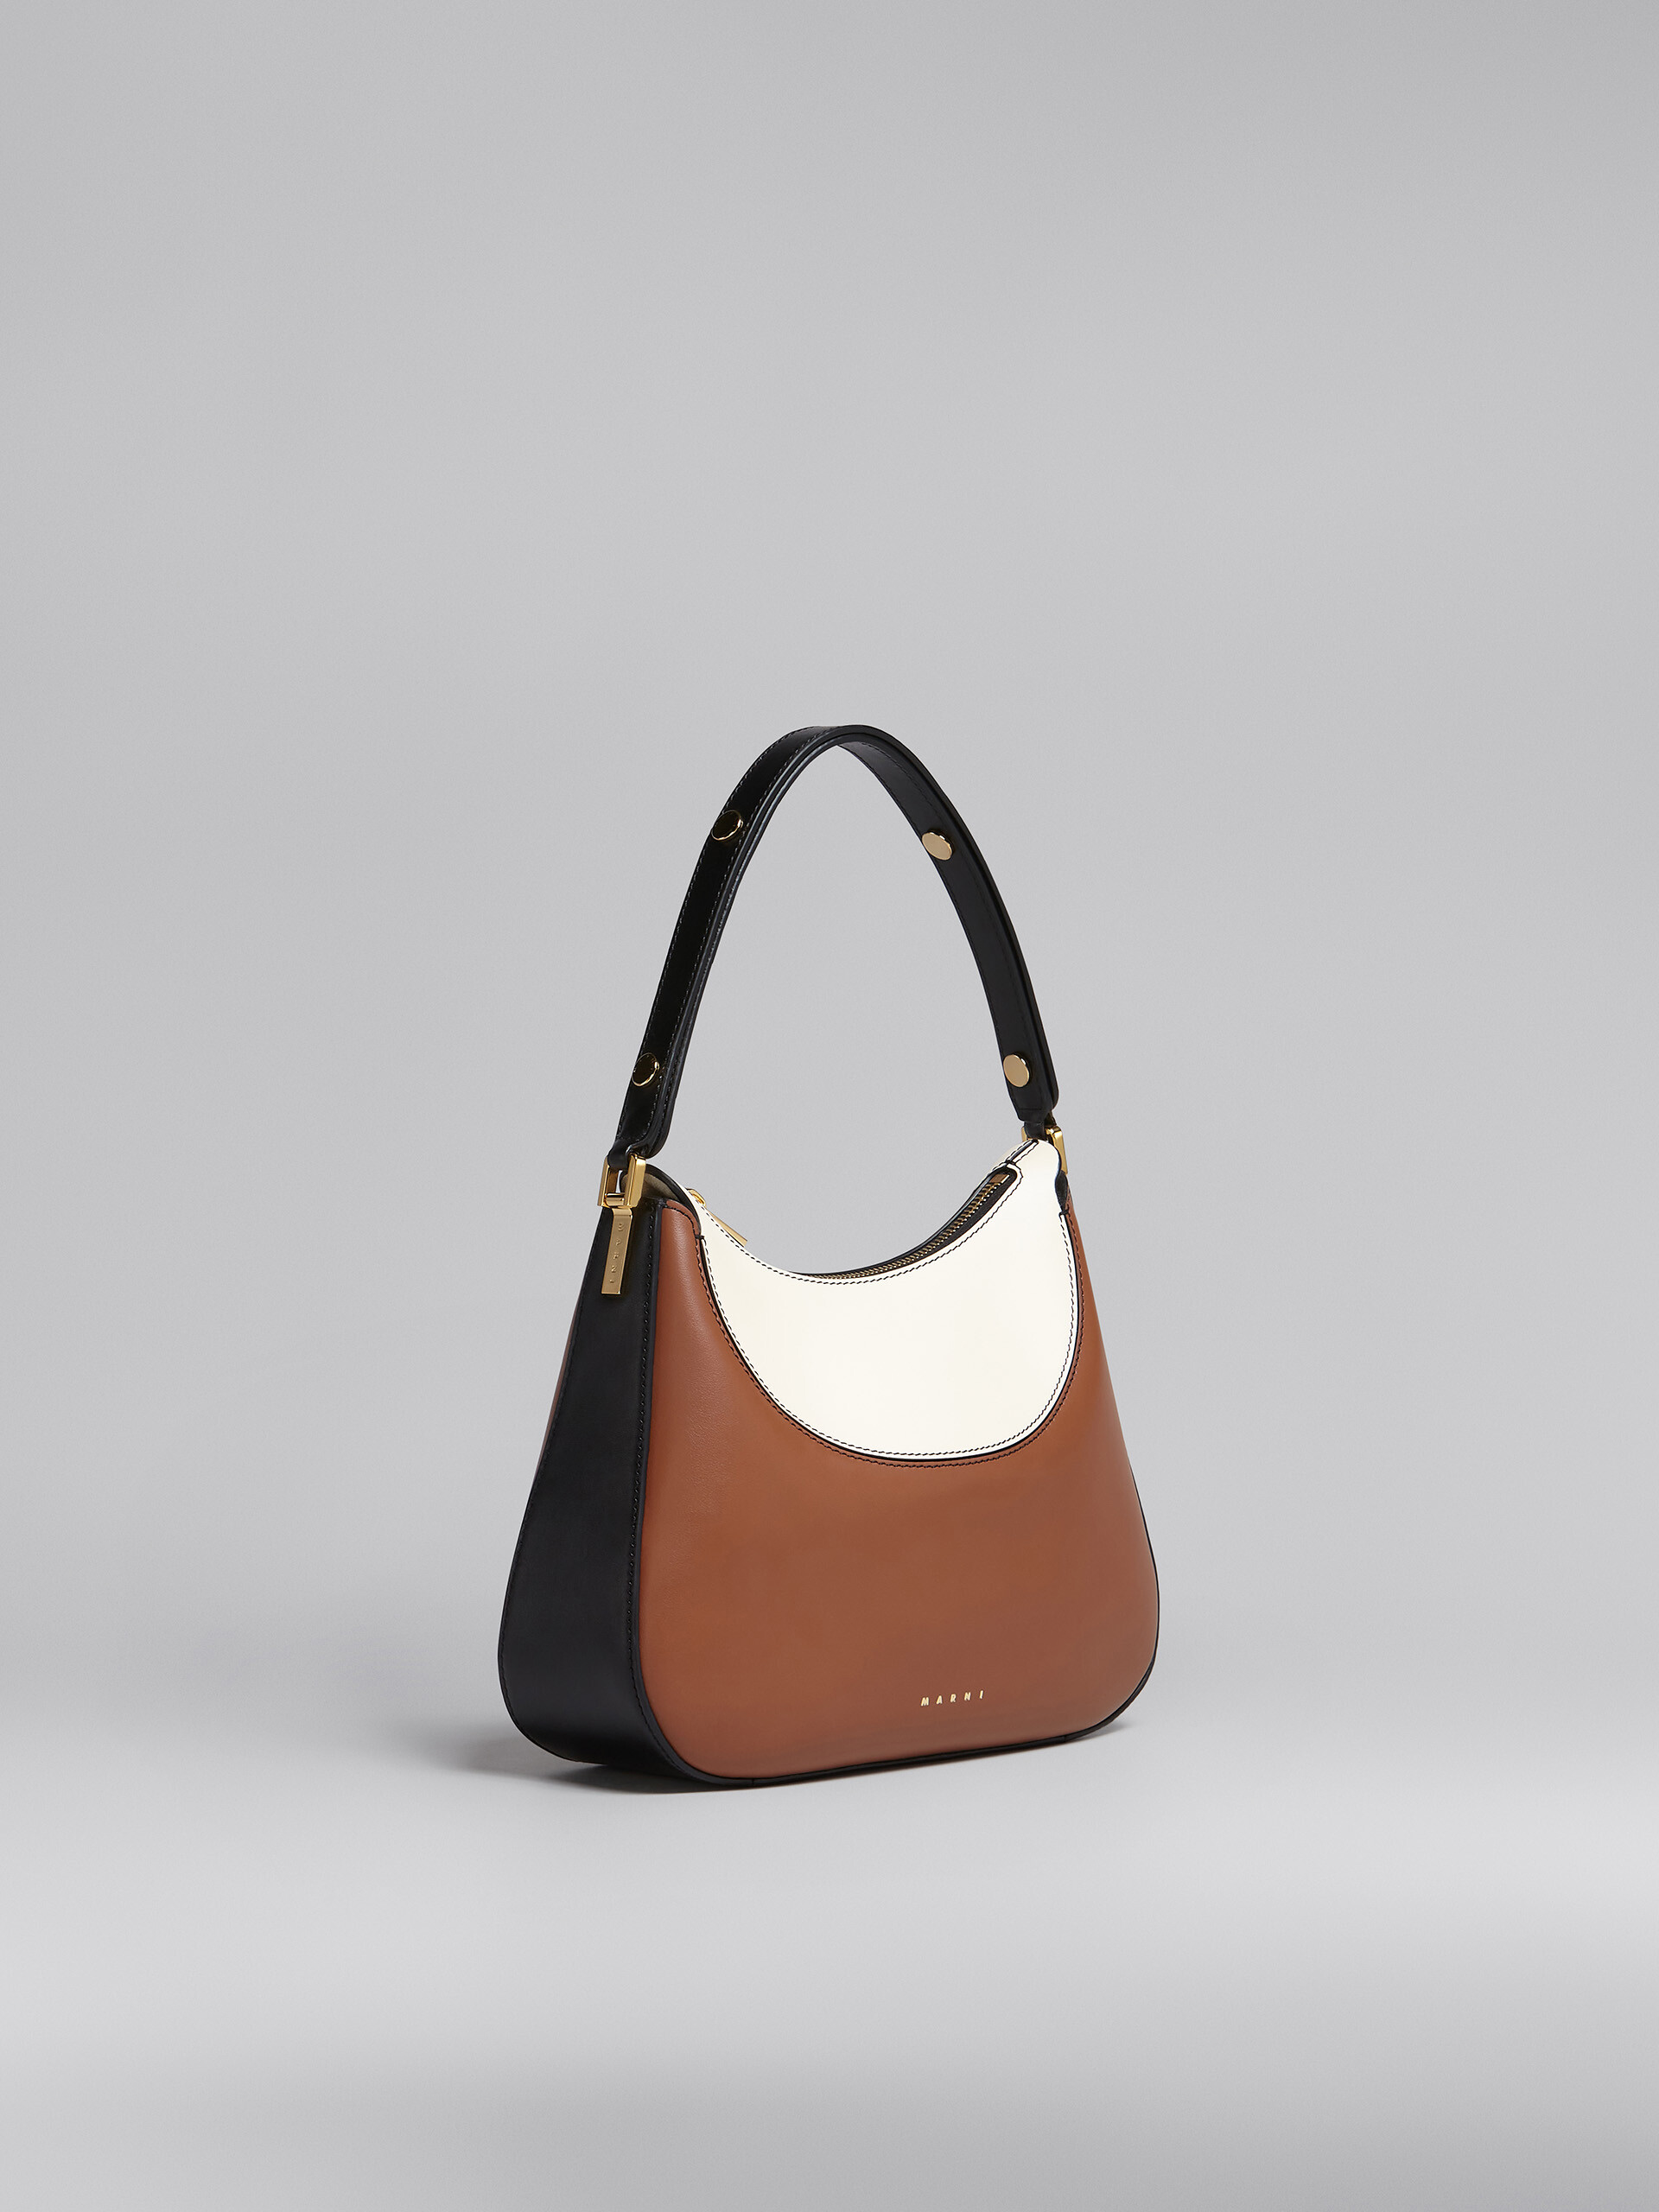 Milano small bag in brown black and white - Handbag - Image 6